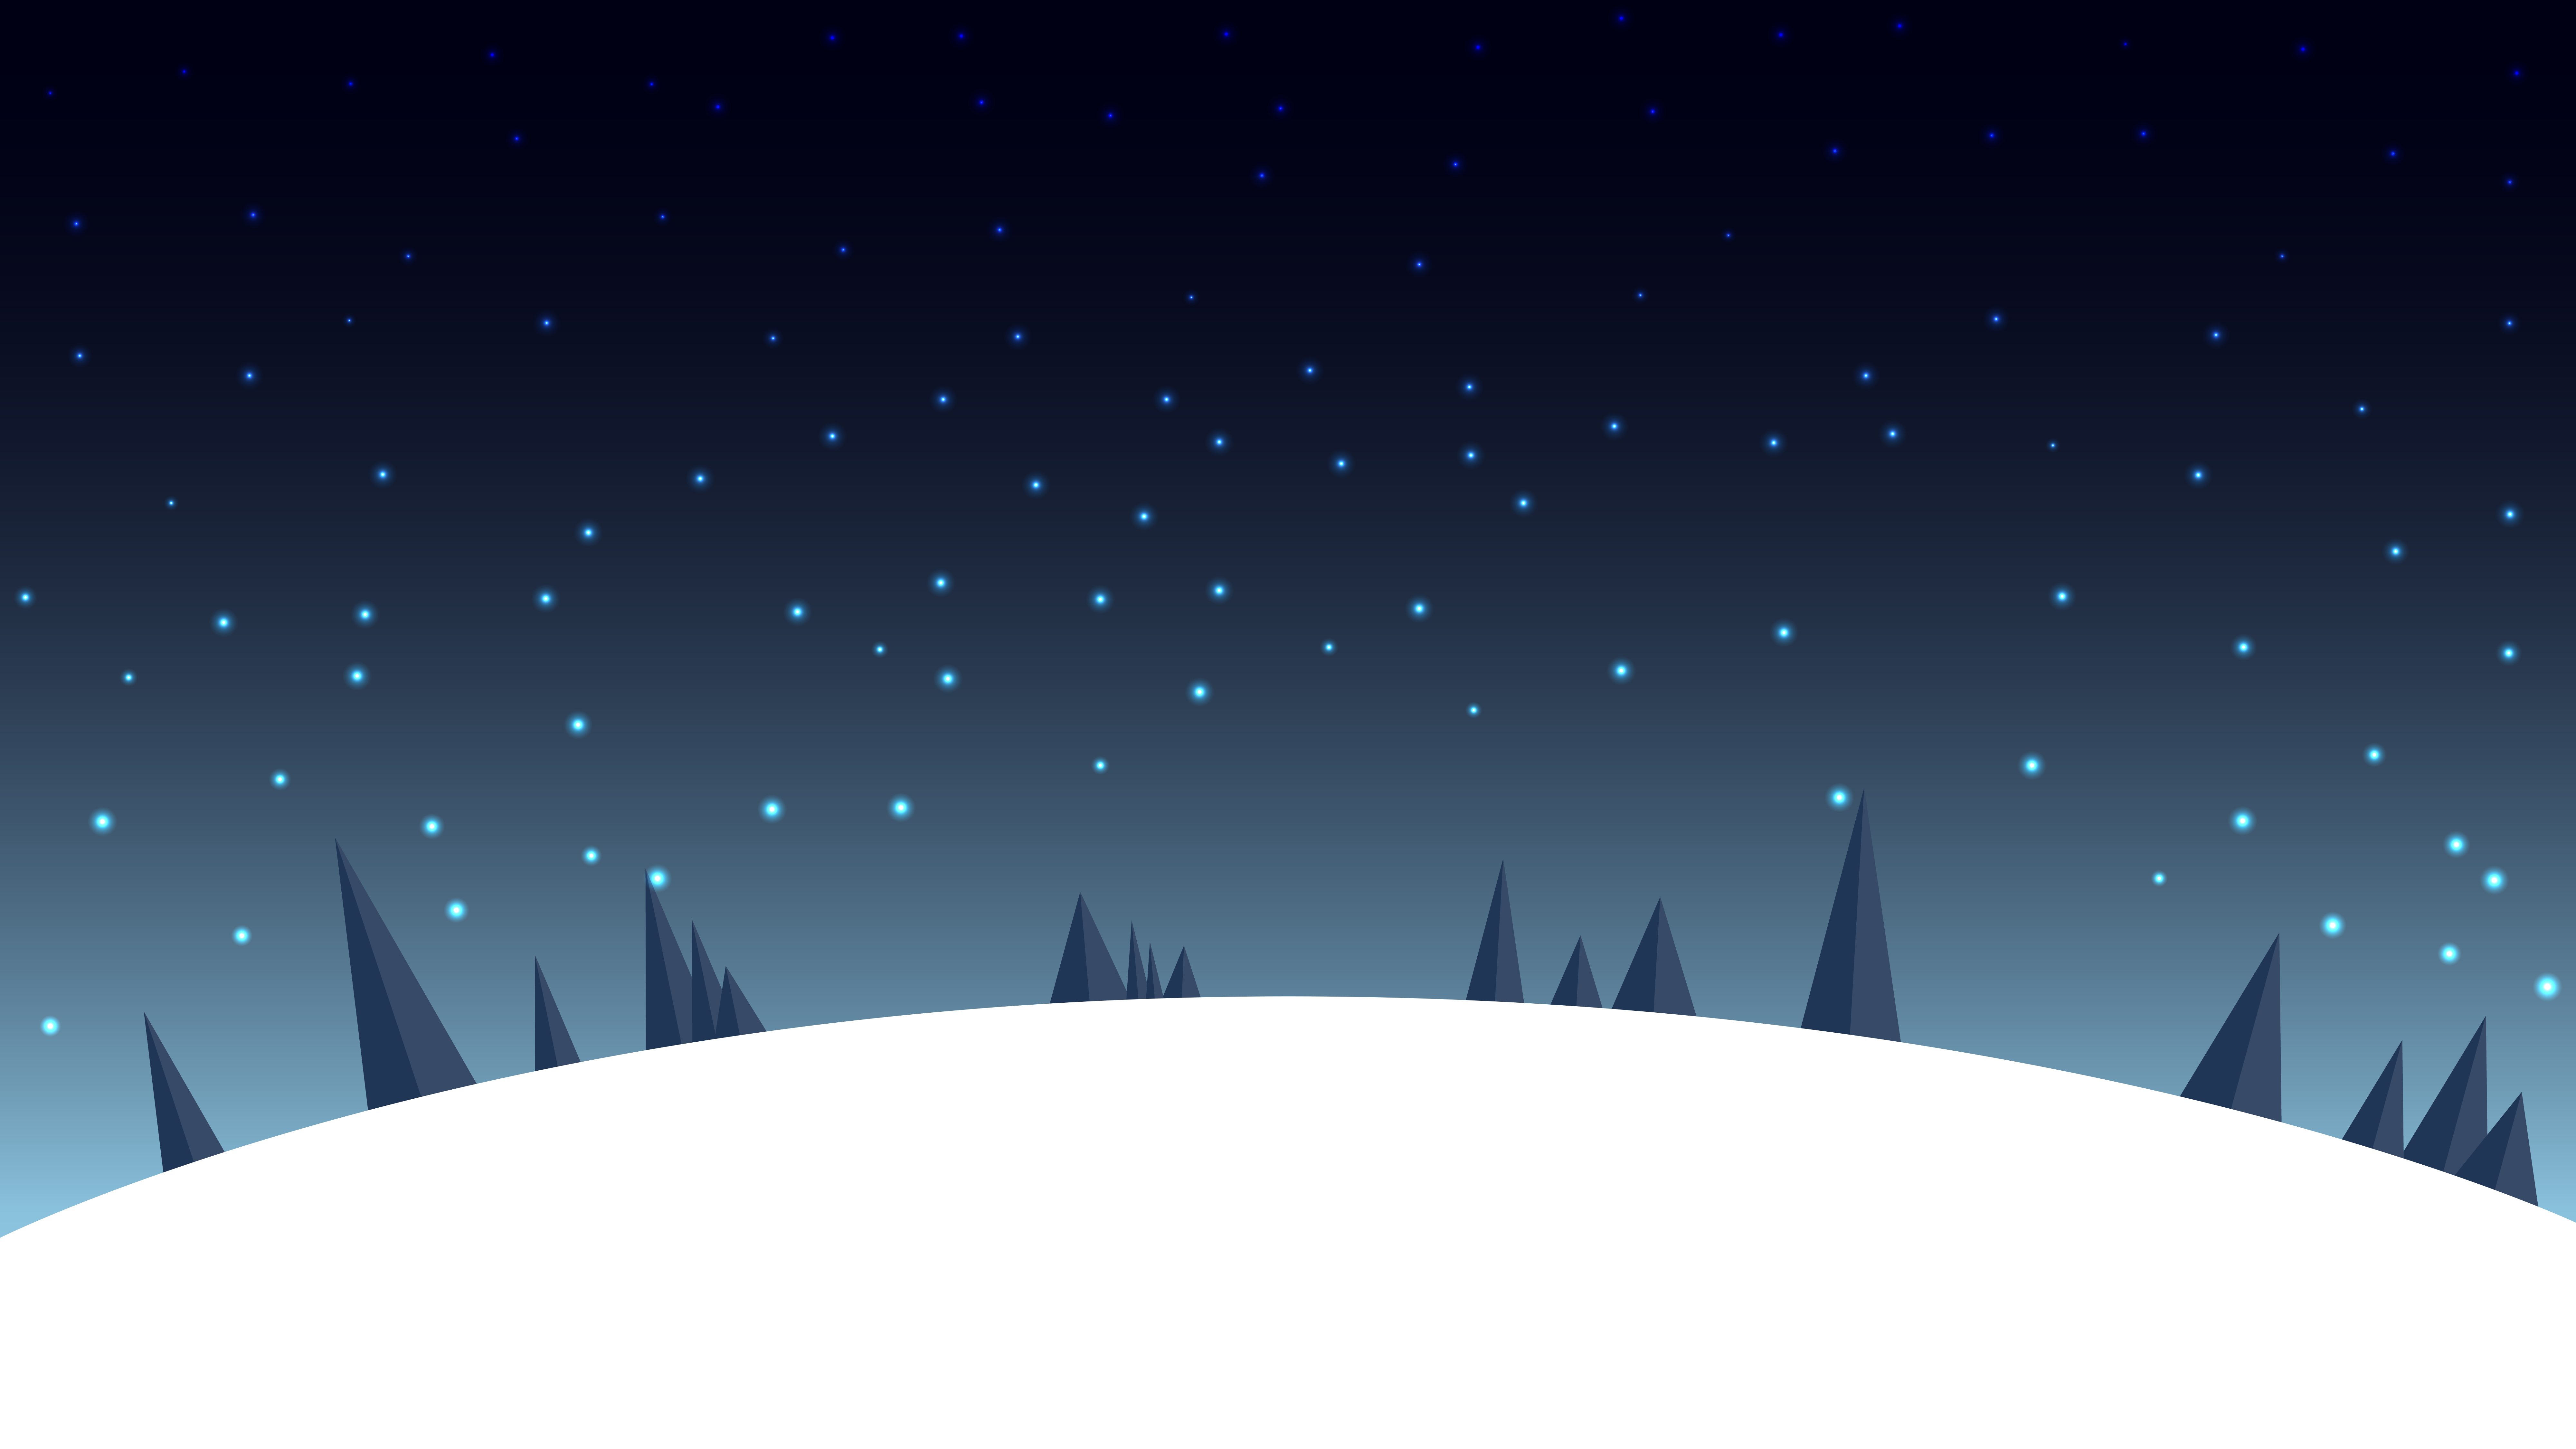 Cartoon night winter landscape with starry sky